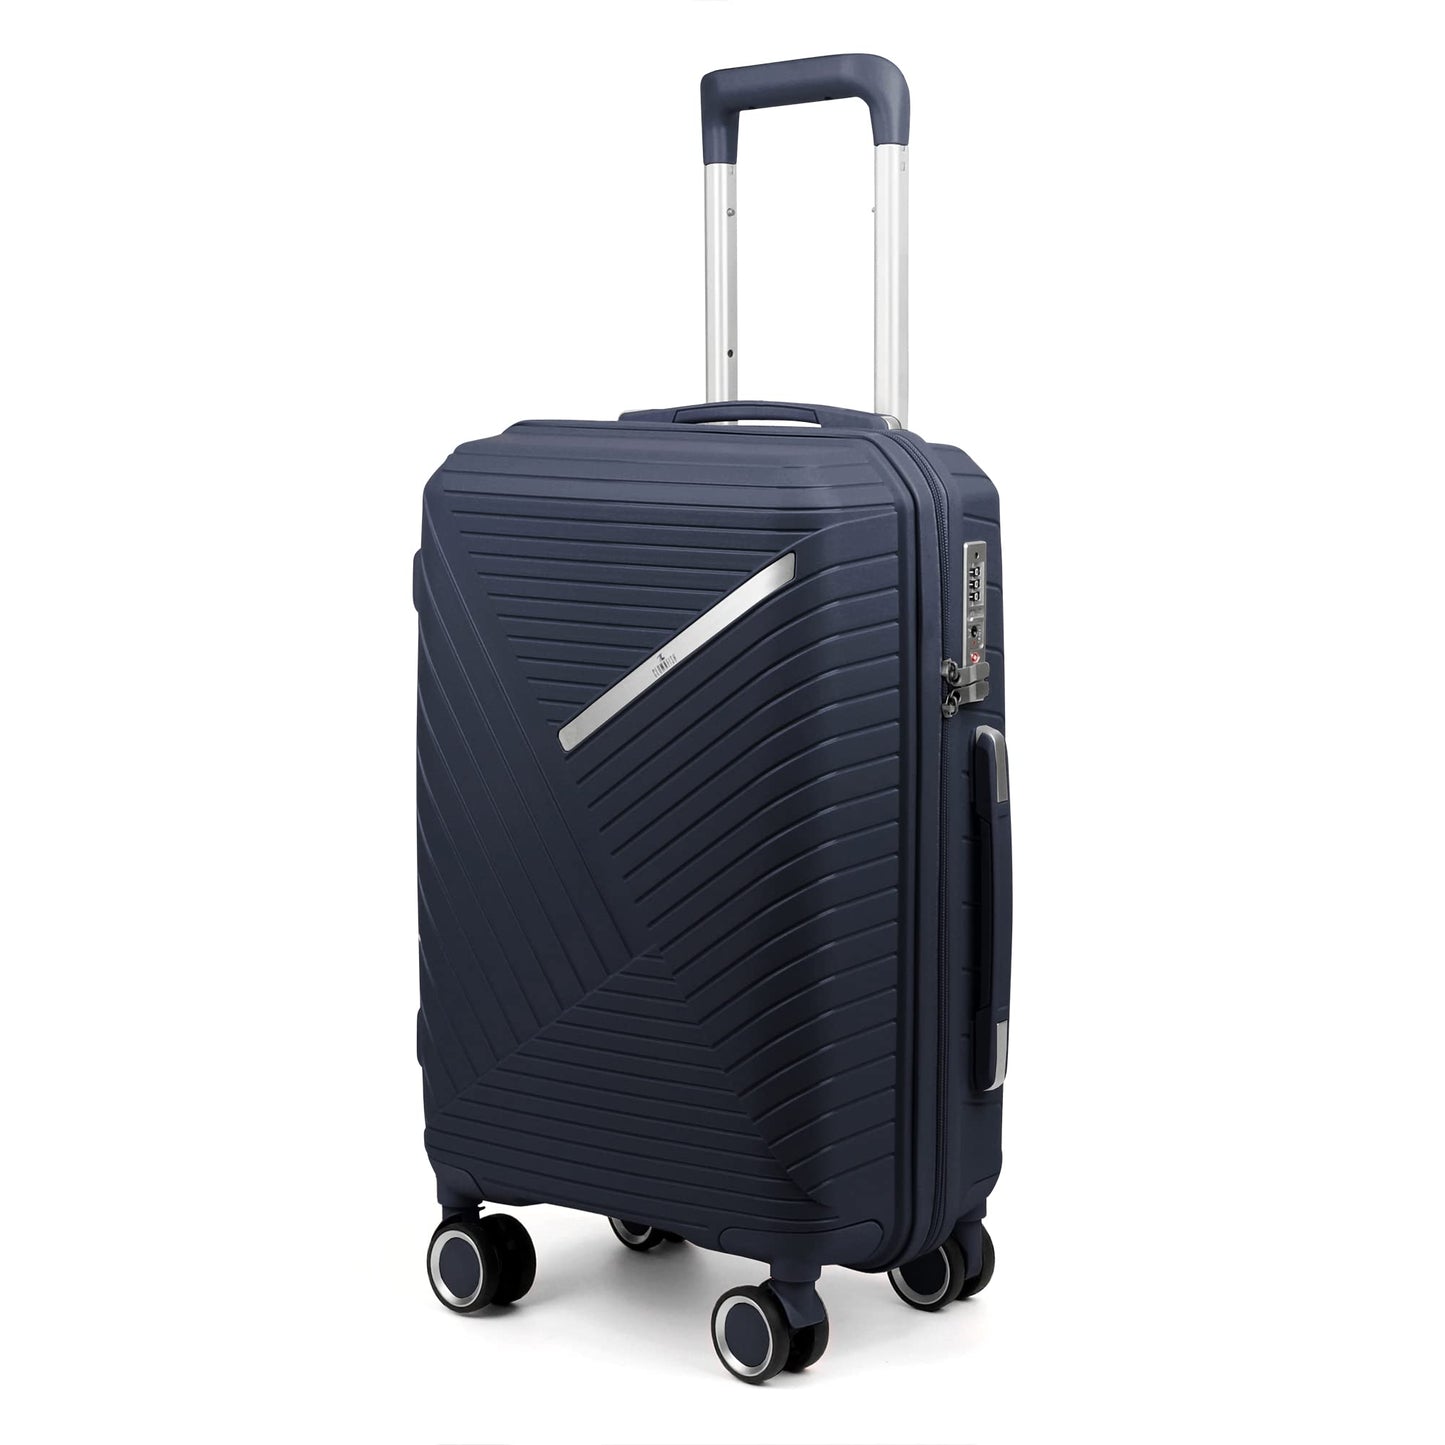 THE CLOWNFISH Denzel Series Luggage Polypropylene Hard Case Suitcase Eight Wheel Trolley Bag with TSA Lock- Navy Blue (Medium size, 66 cm-26 inch)